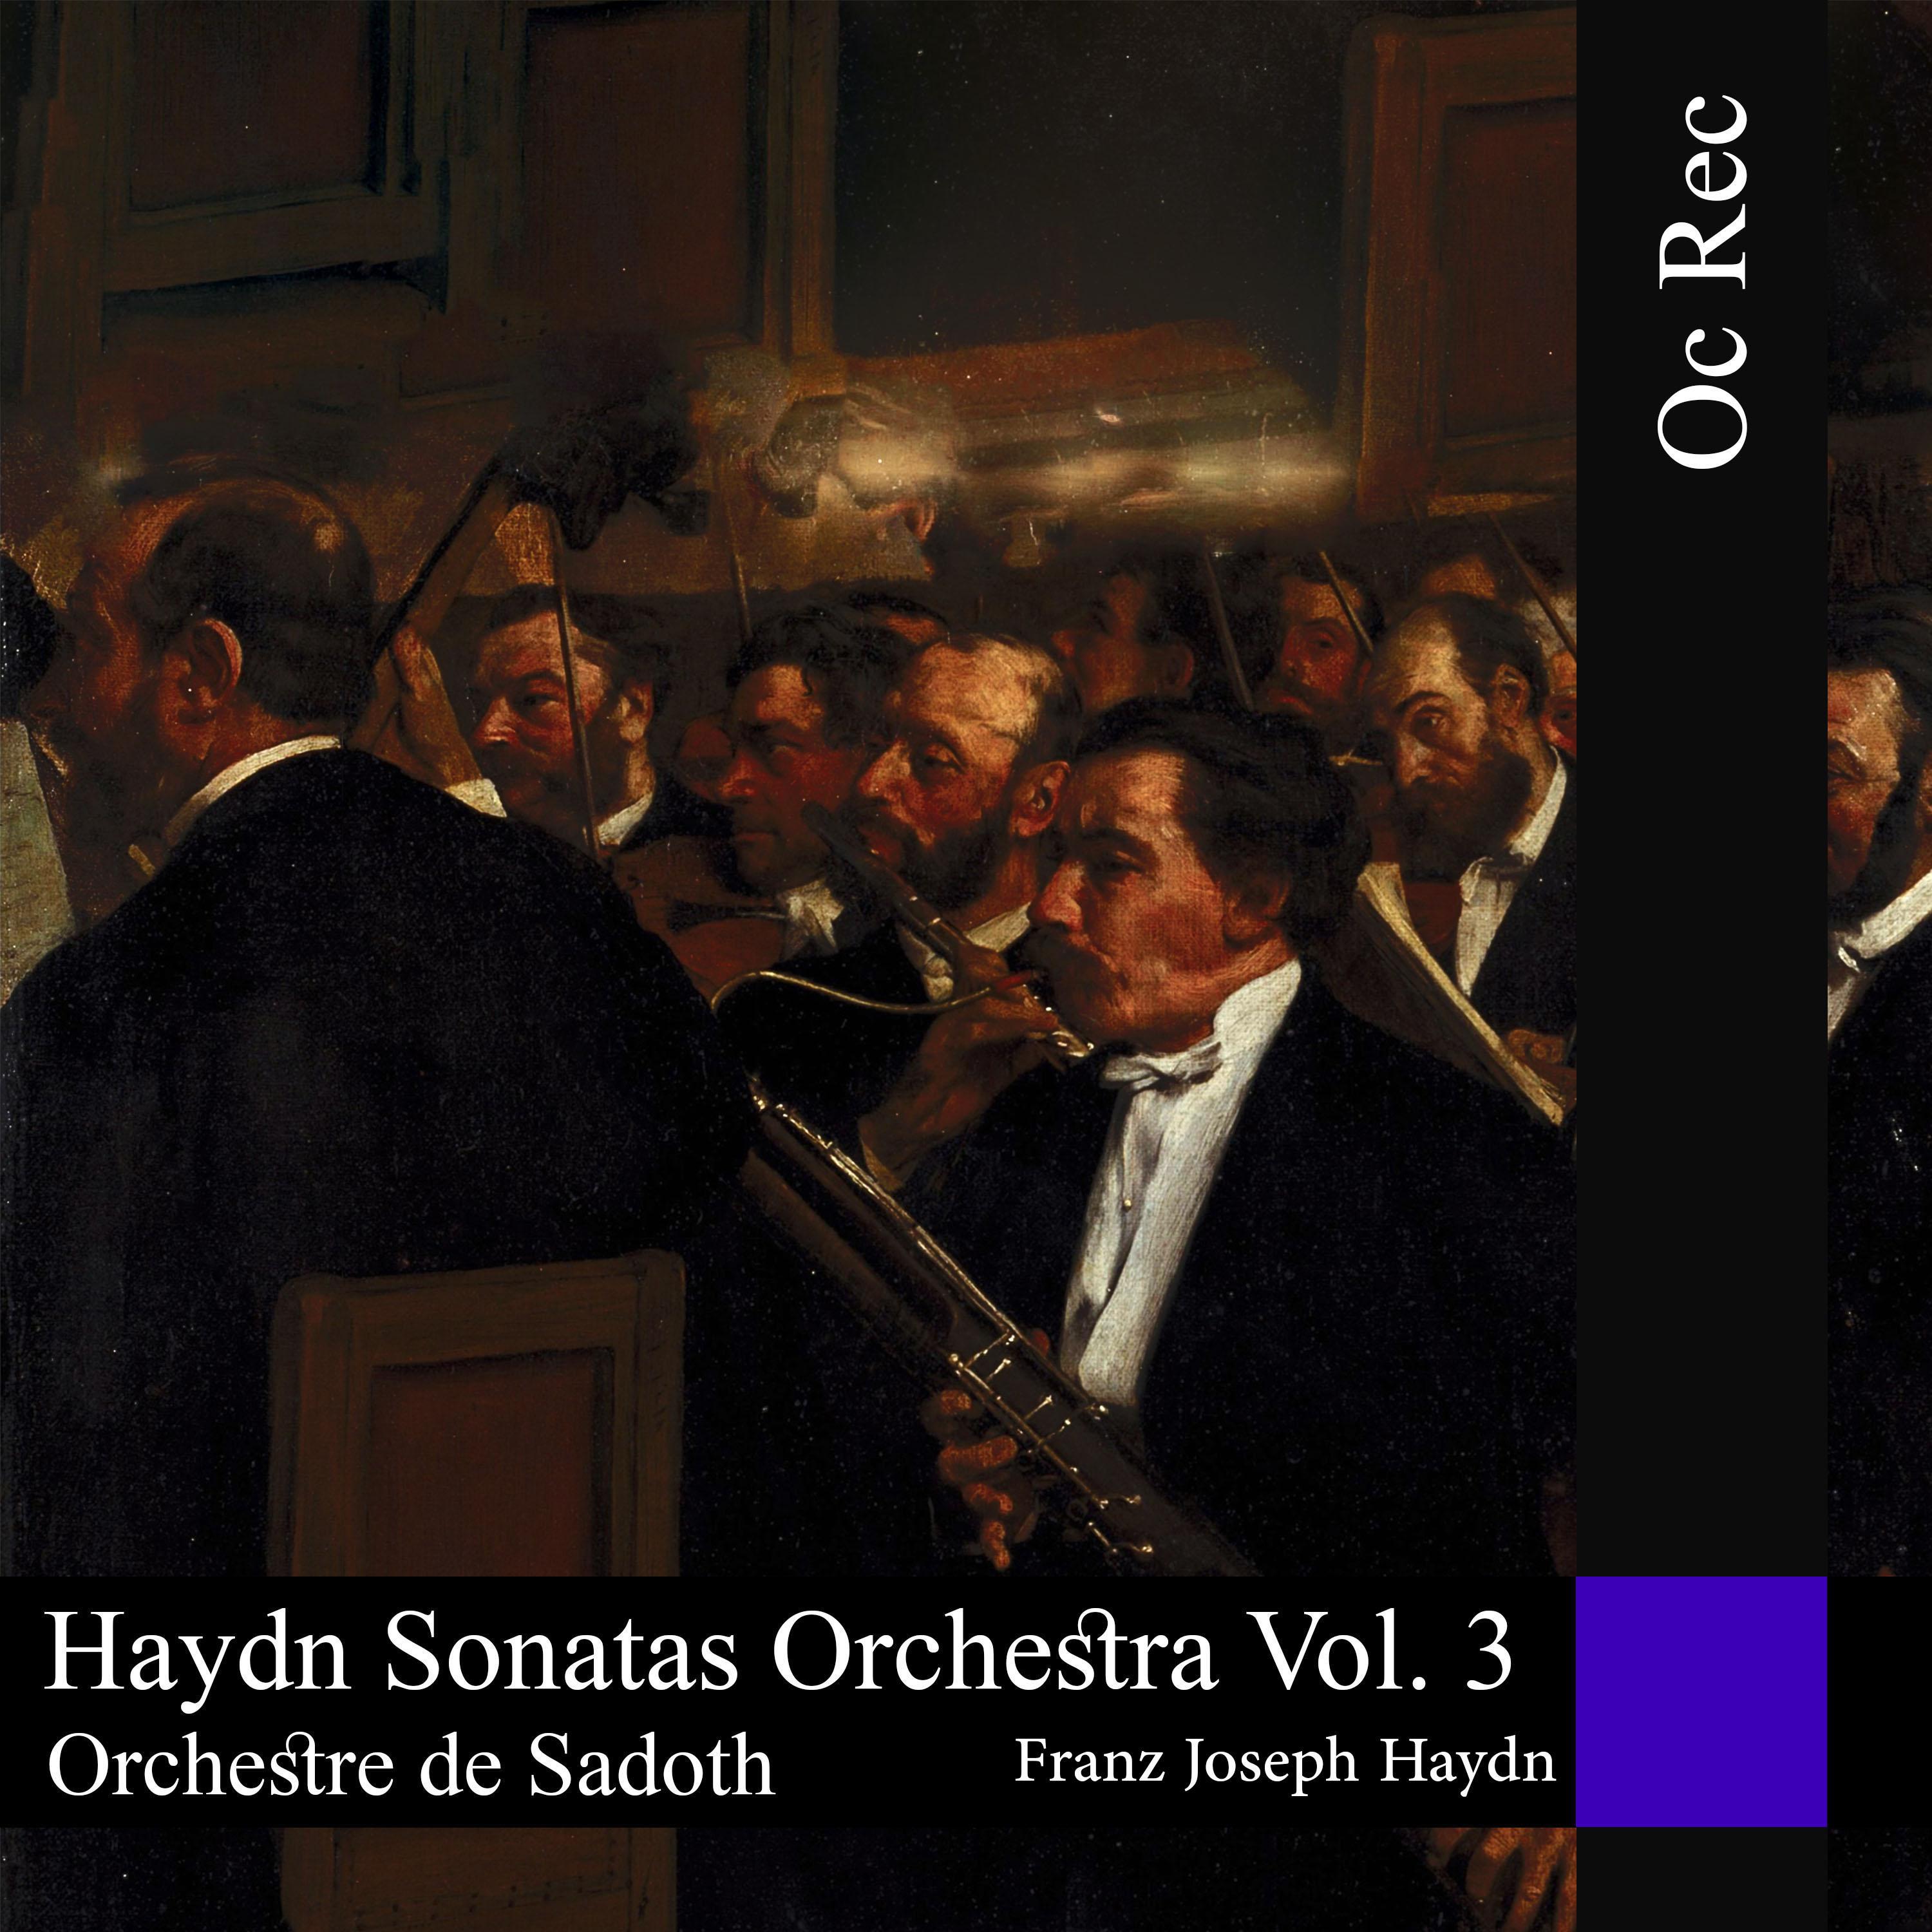 Franz Joseph Haydn Sonatas Orchestra Vol. 3